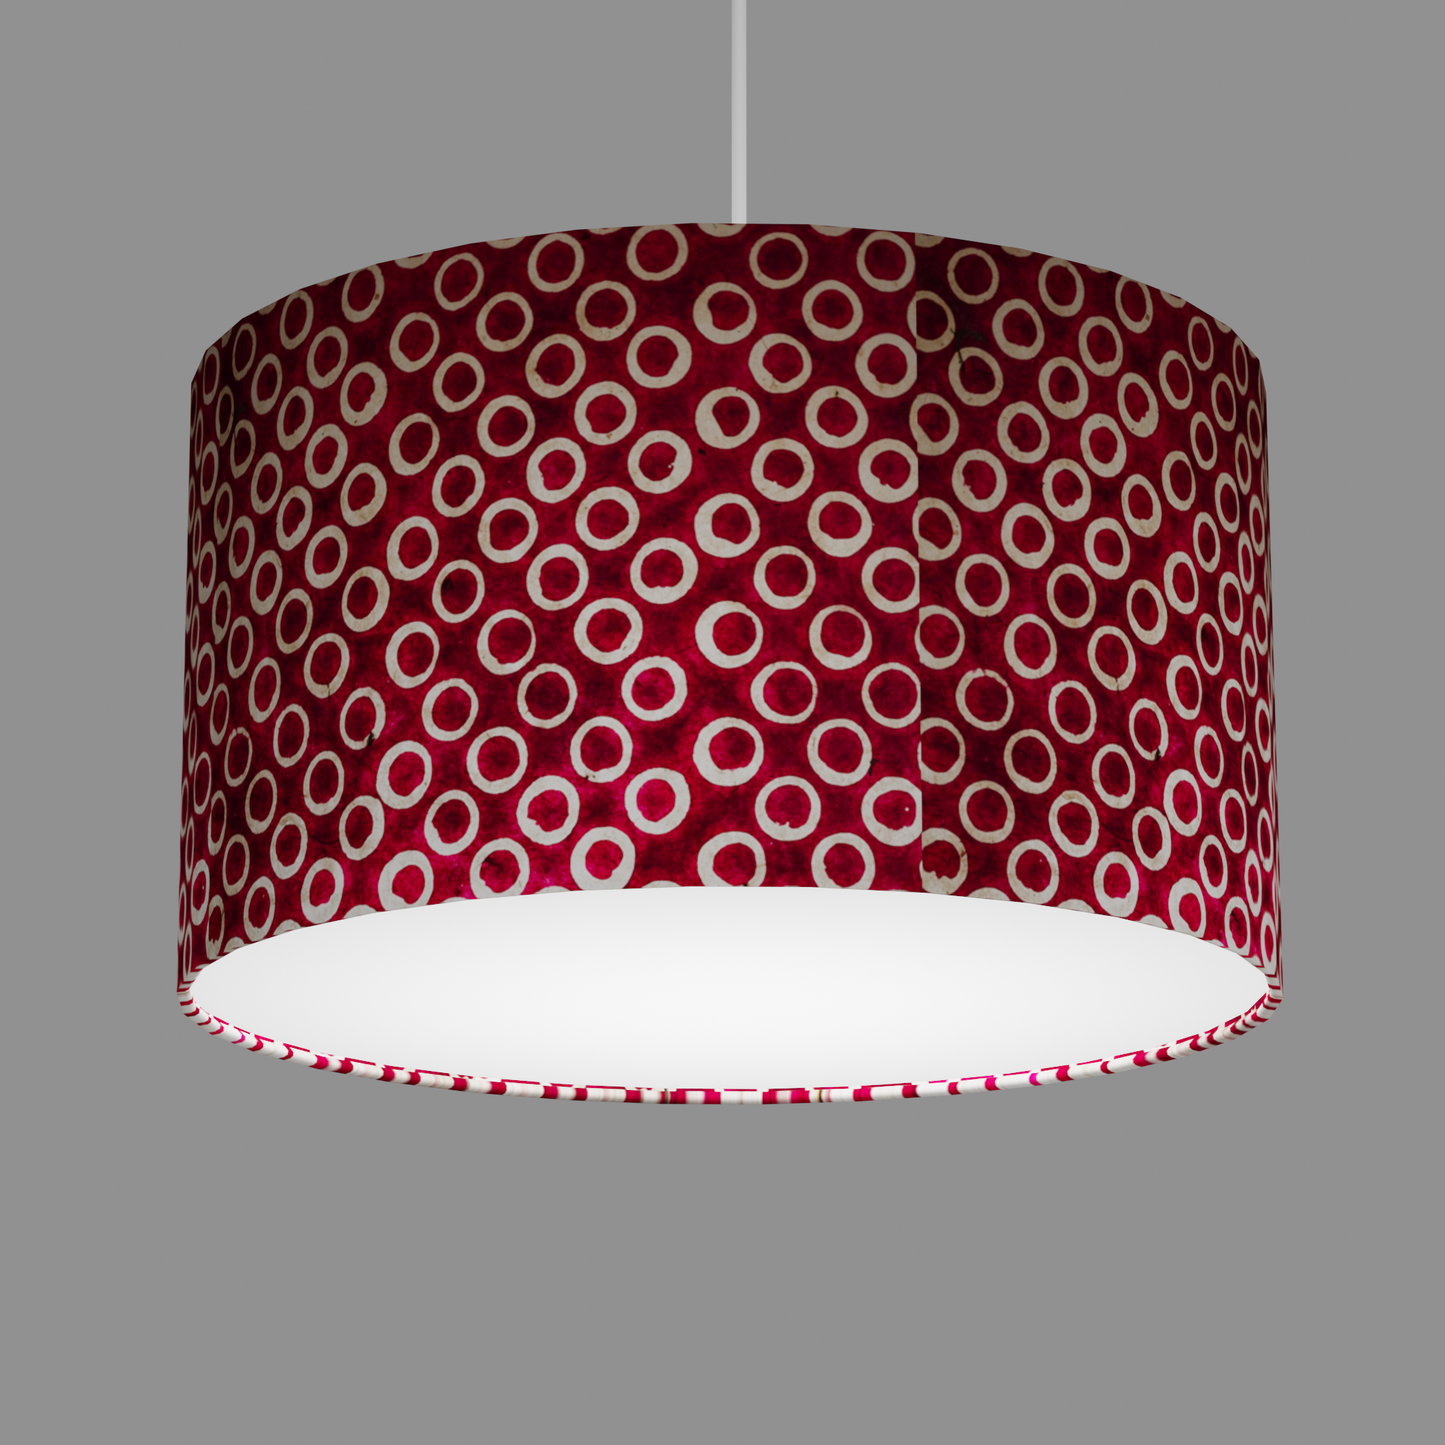 Drum Lamp Shade - P73 - Batik Cranberry Circles, 35cm(d) x 20cm(h)